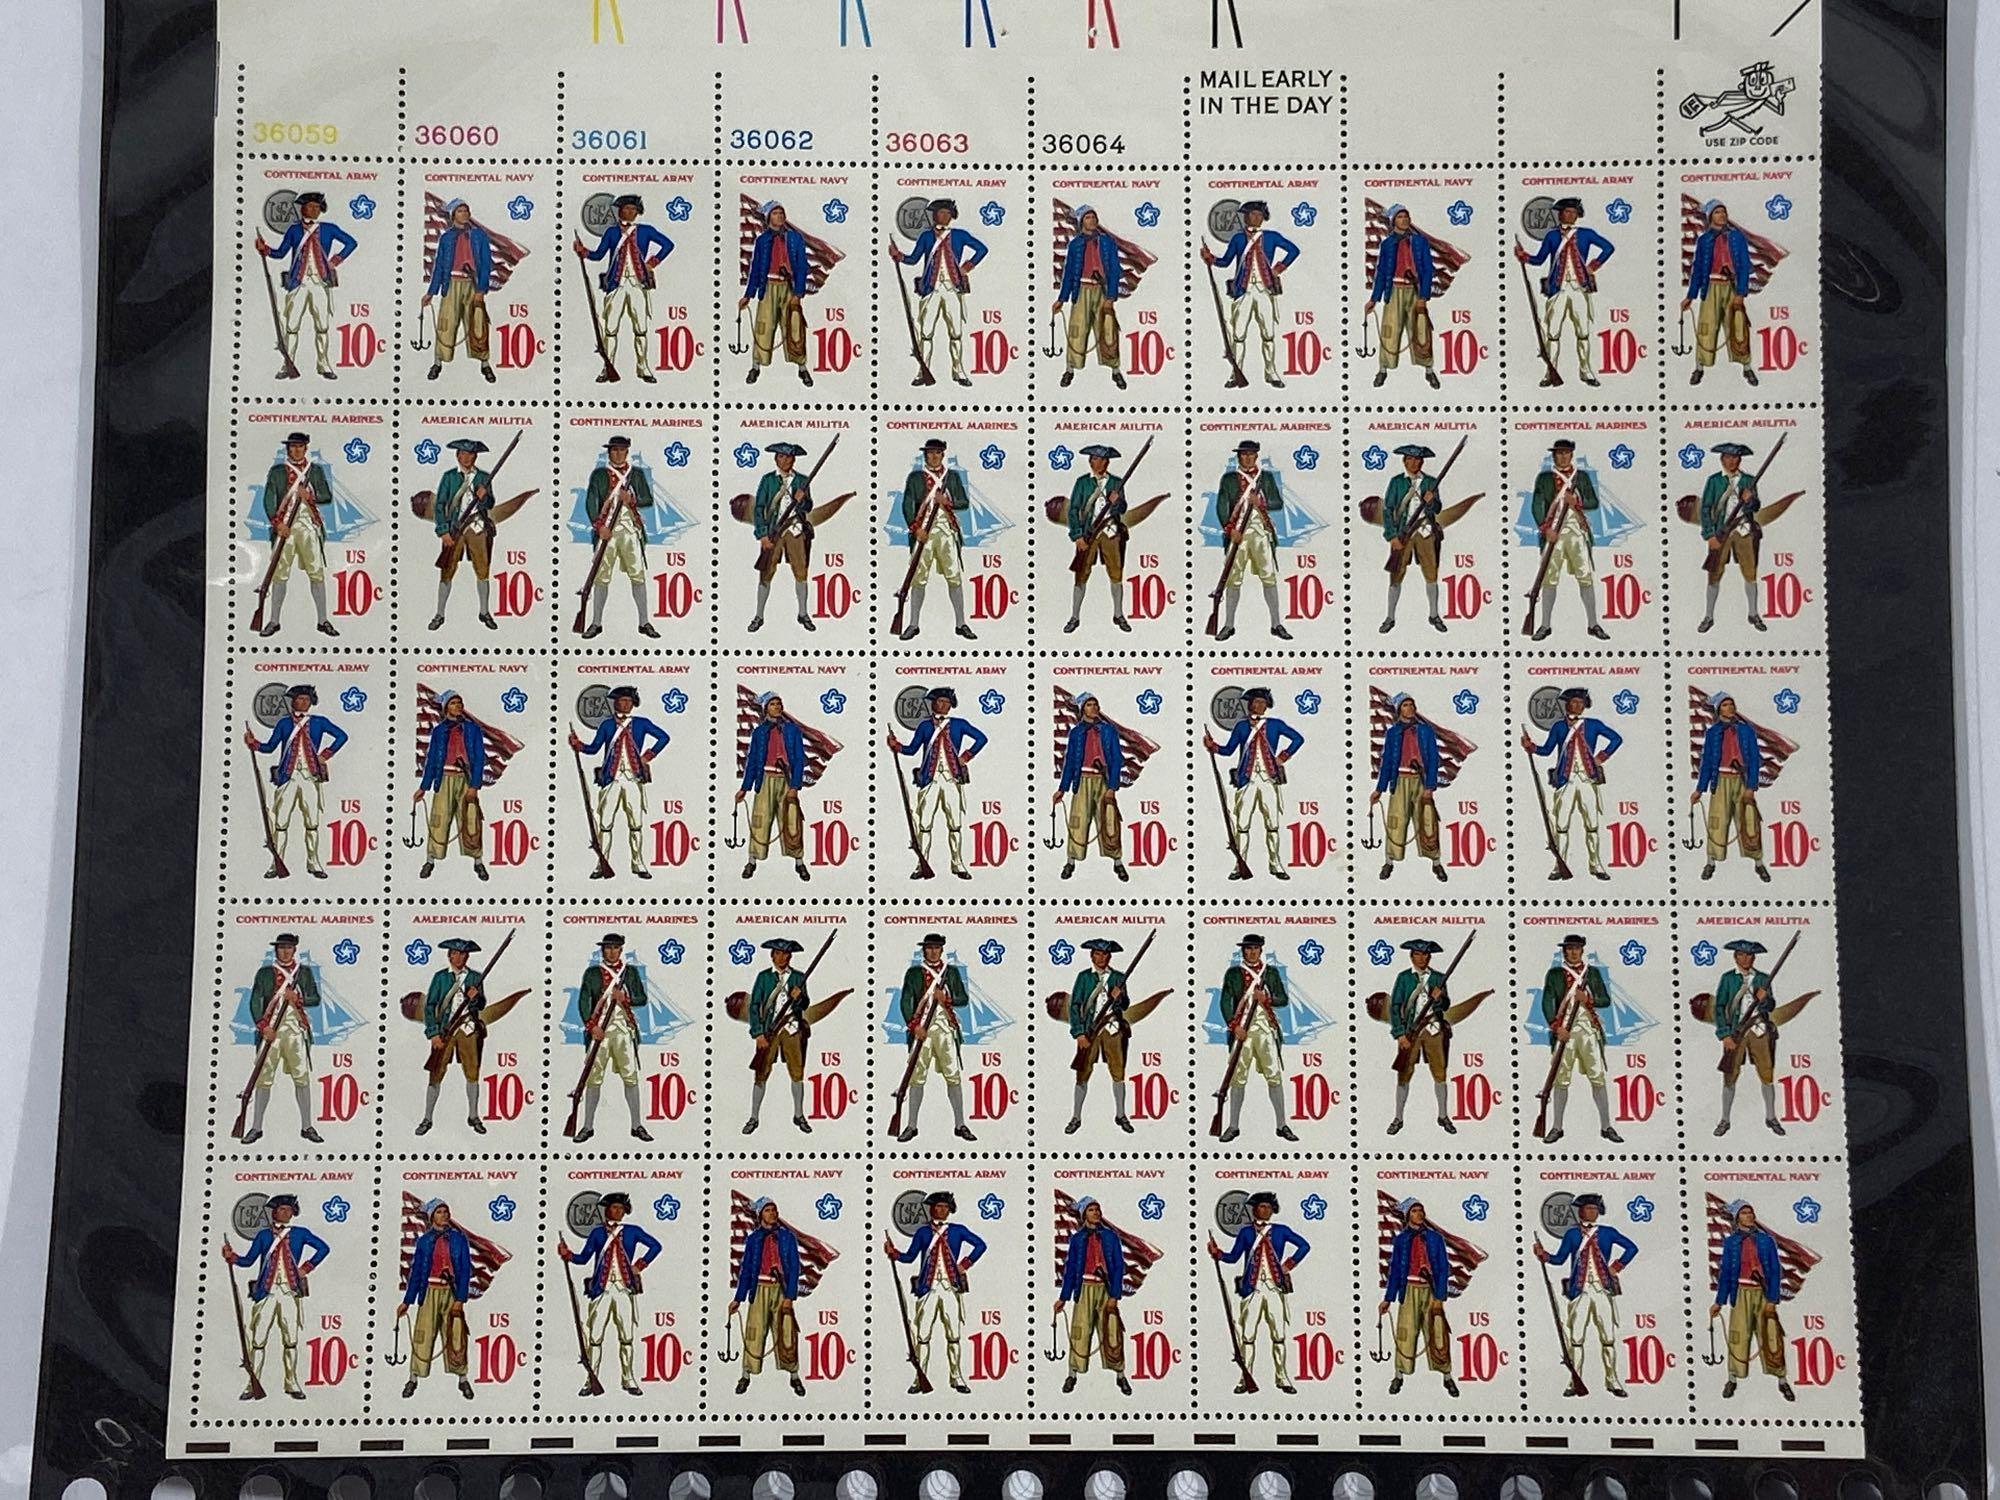 Lot of 12 U.S. Stamp Sheets